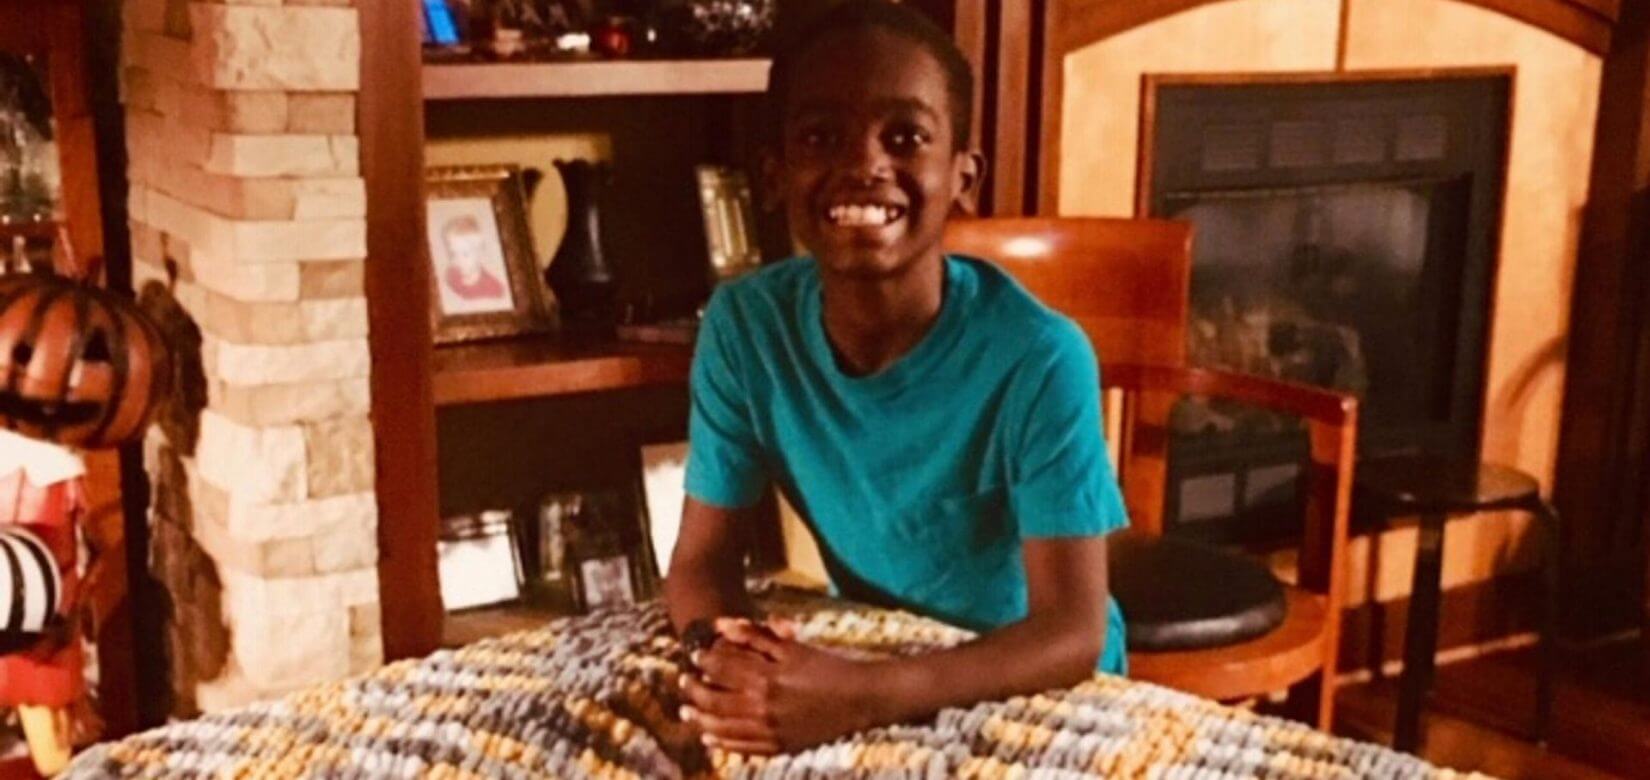 Viral: Αυτό το 11χρονο αγόρι πλέκει 5 ώρες κάθε μέρα  και έχει φτιάξει μικρά αριστουργήματα! (εικόνες)